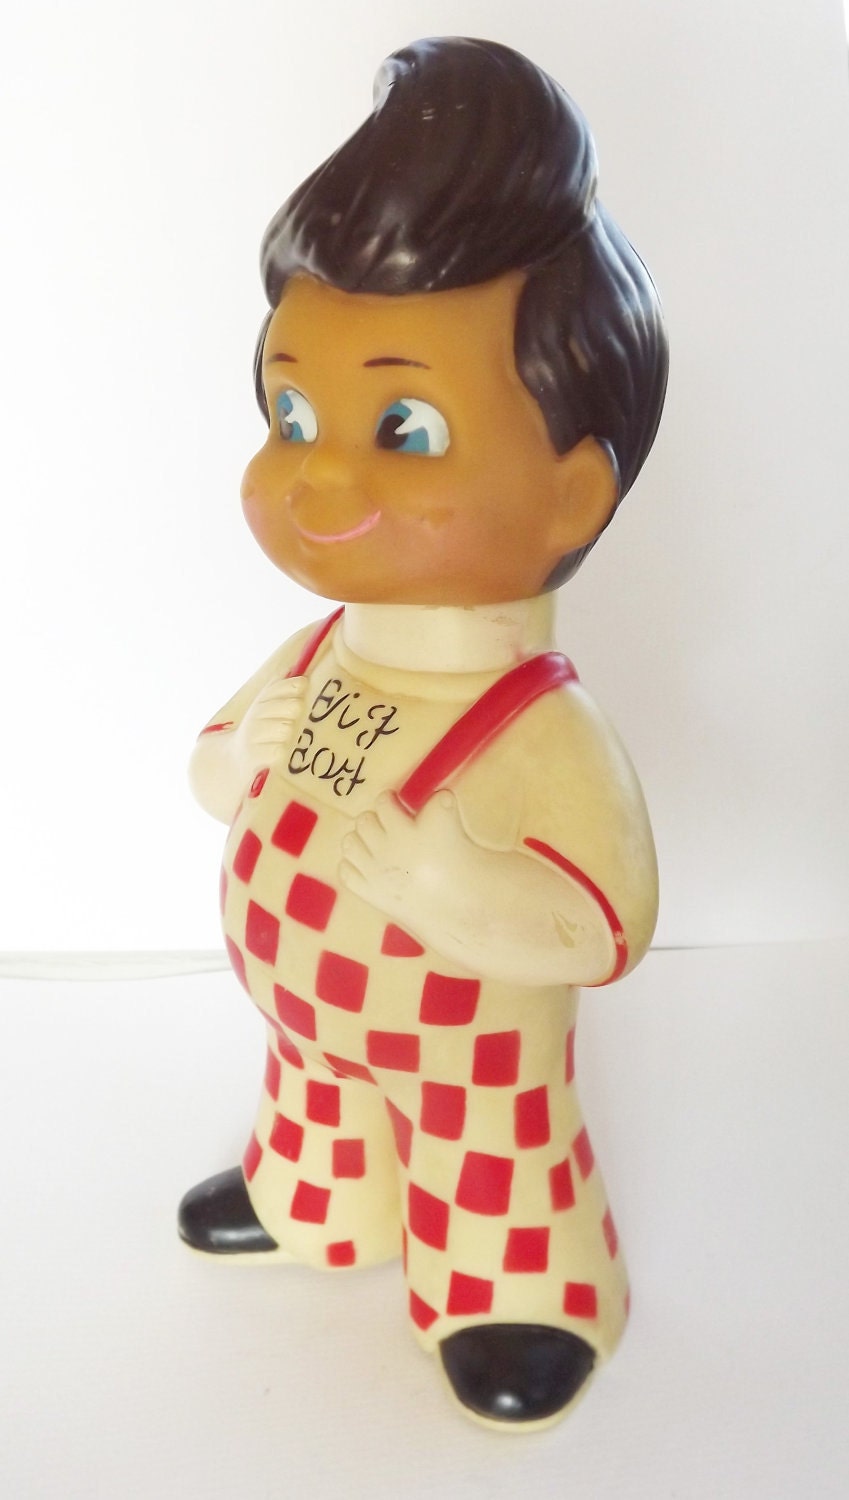 Vintage Bank Toy Shoneys Big Boy Retro 1970s Doll Figurine